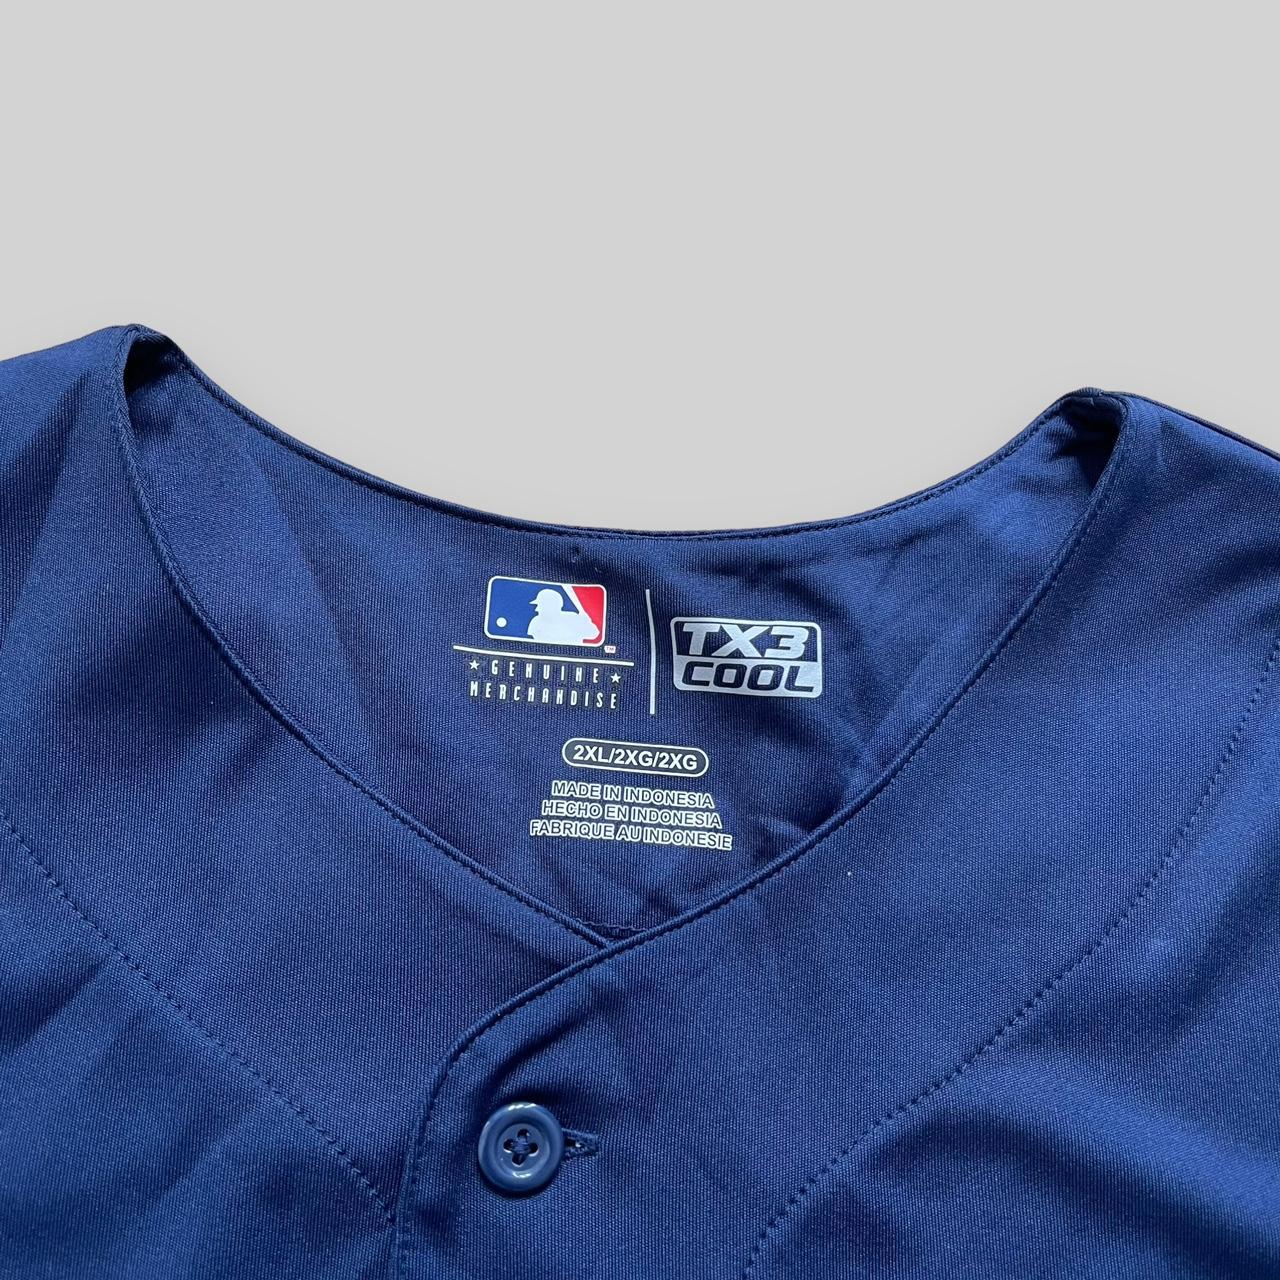 Majestic MLB Detroit Tigers Ian Kinsler Baseball Shirt (XXL)